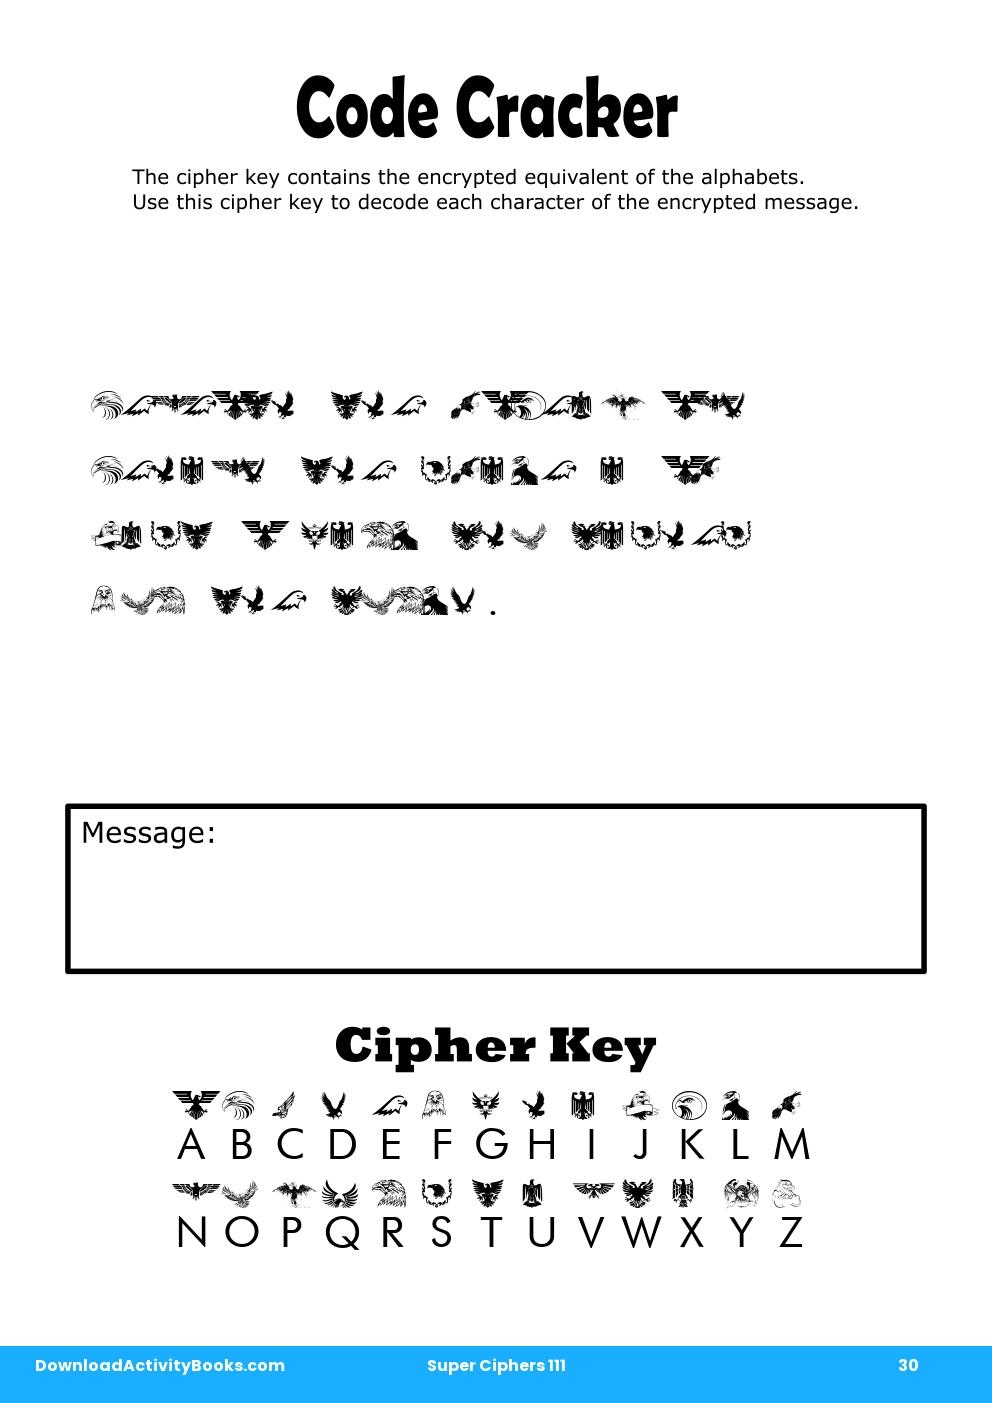 Code Cracker in Super Ciphers 111